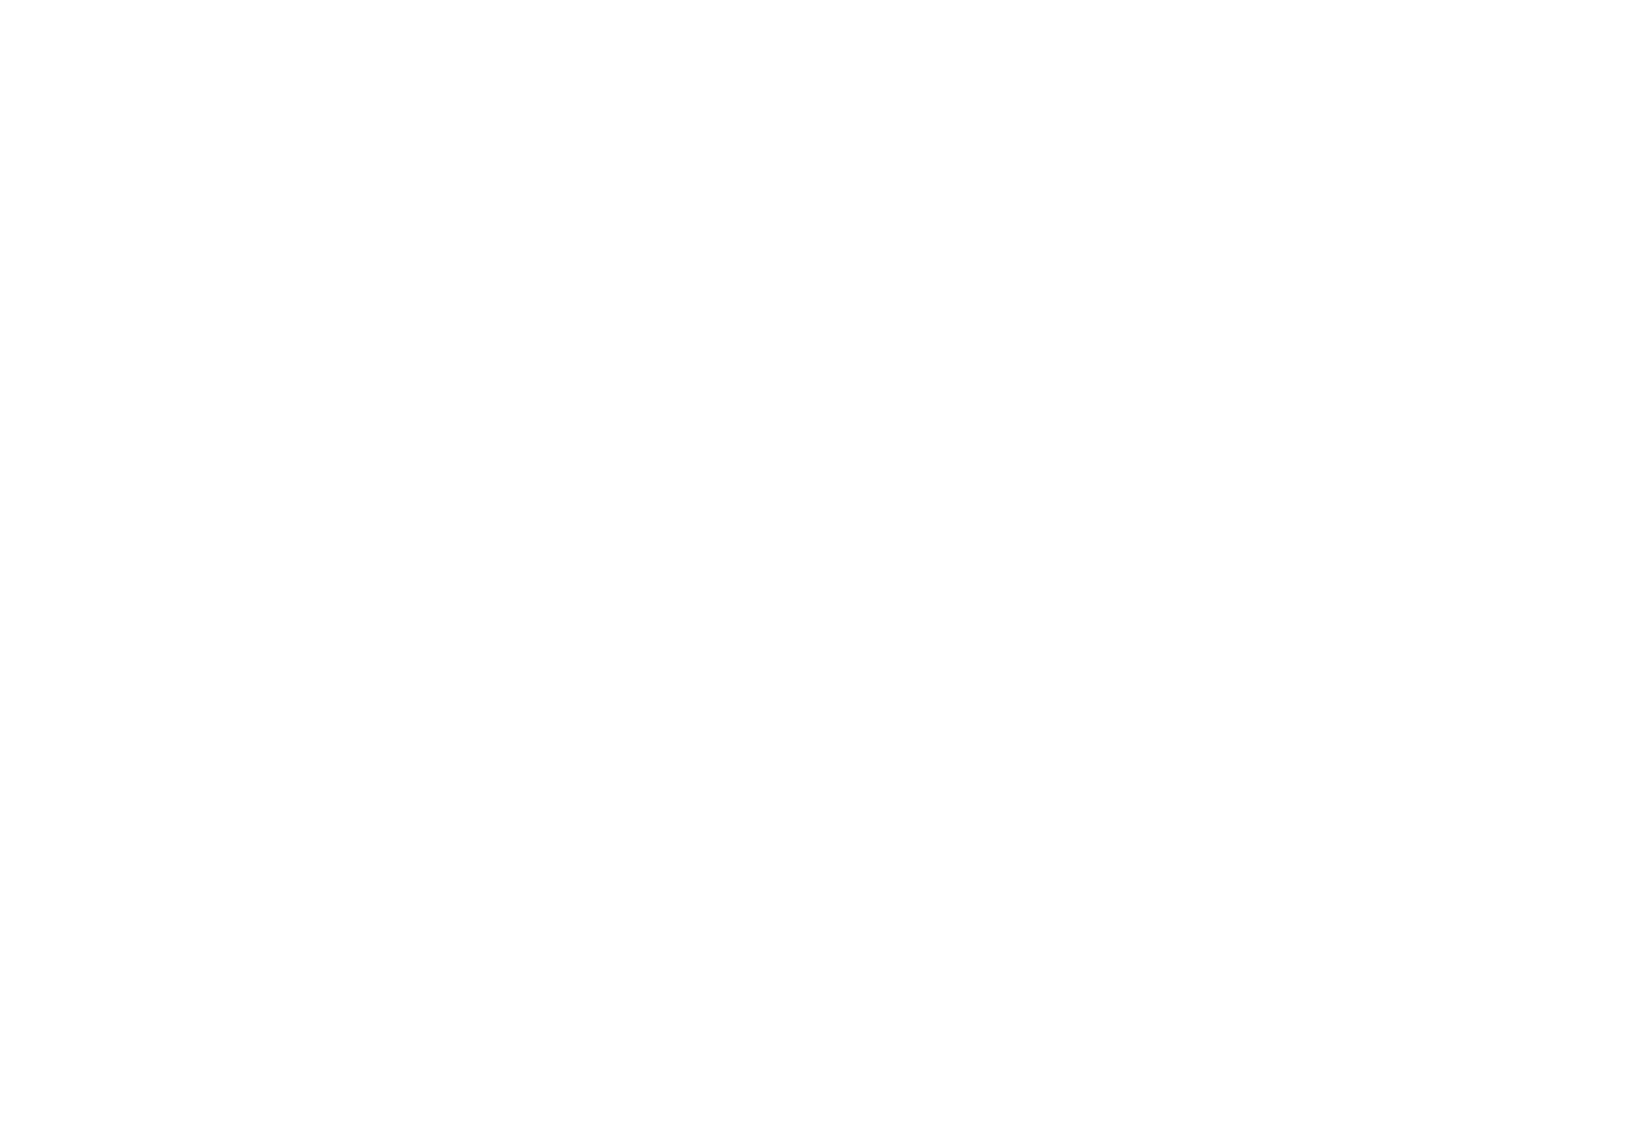 NAHB - National Association of Home Builders' Logo